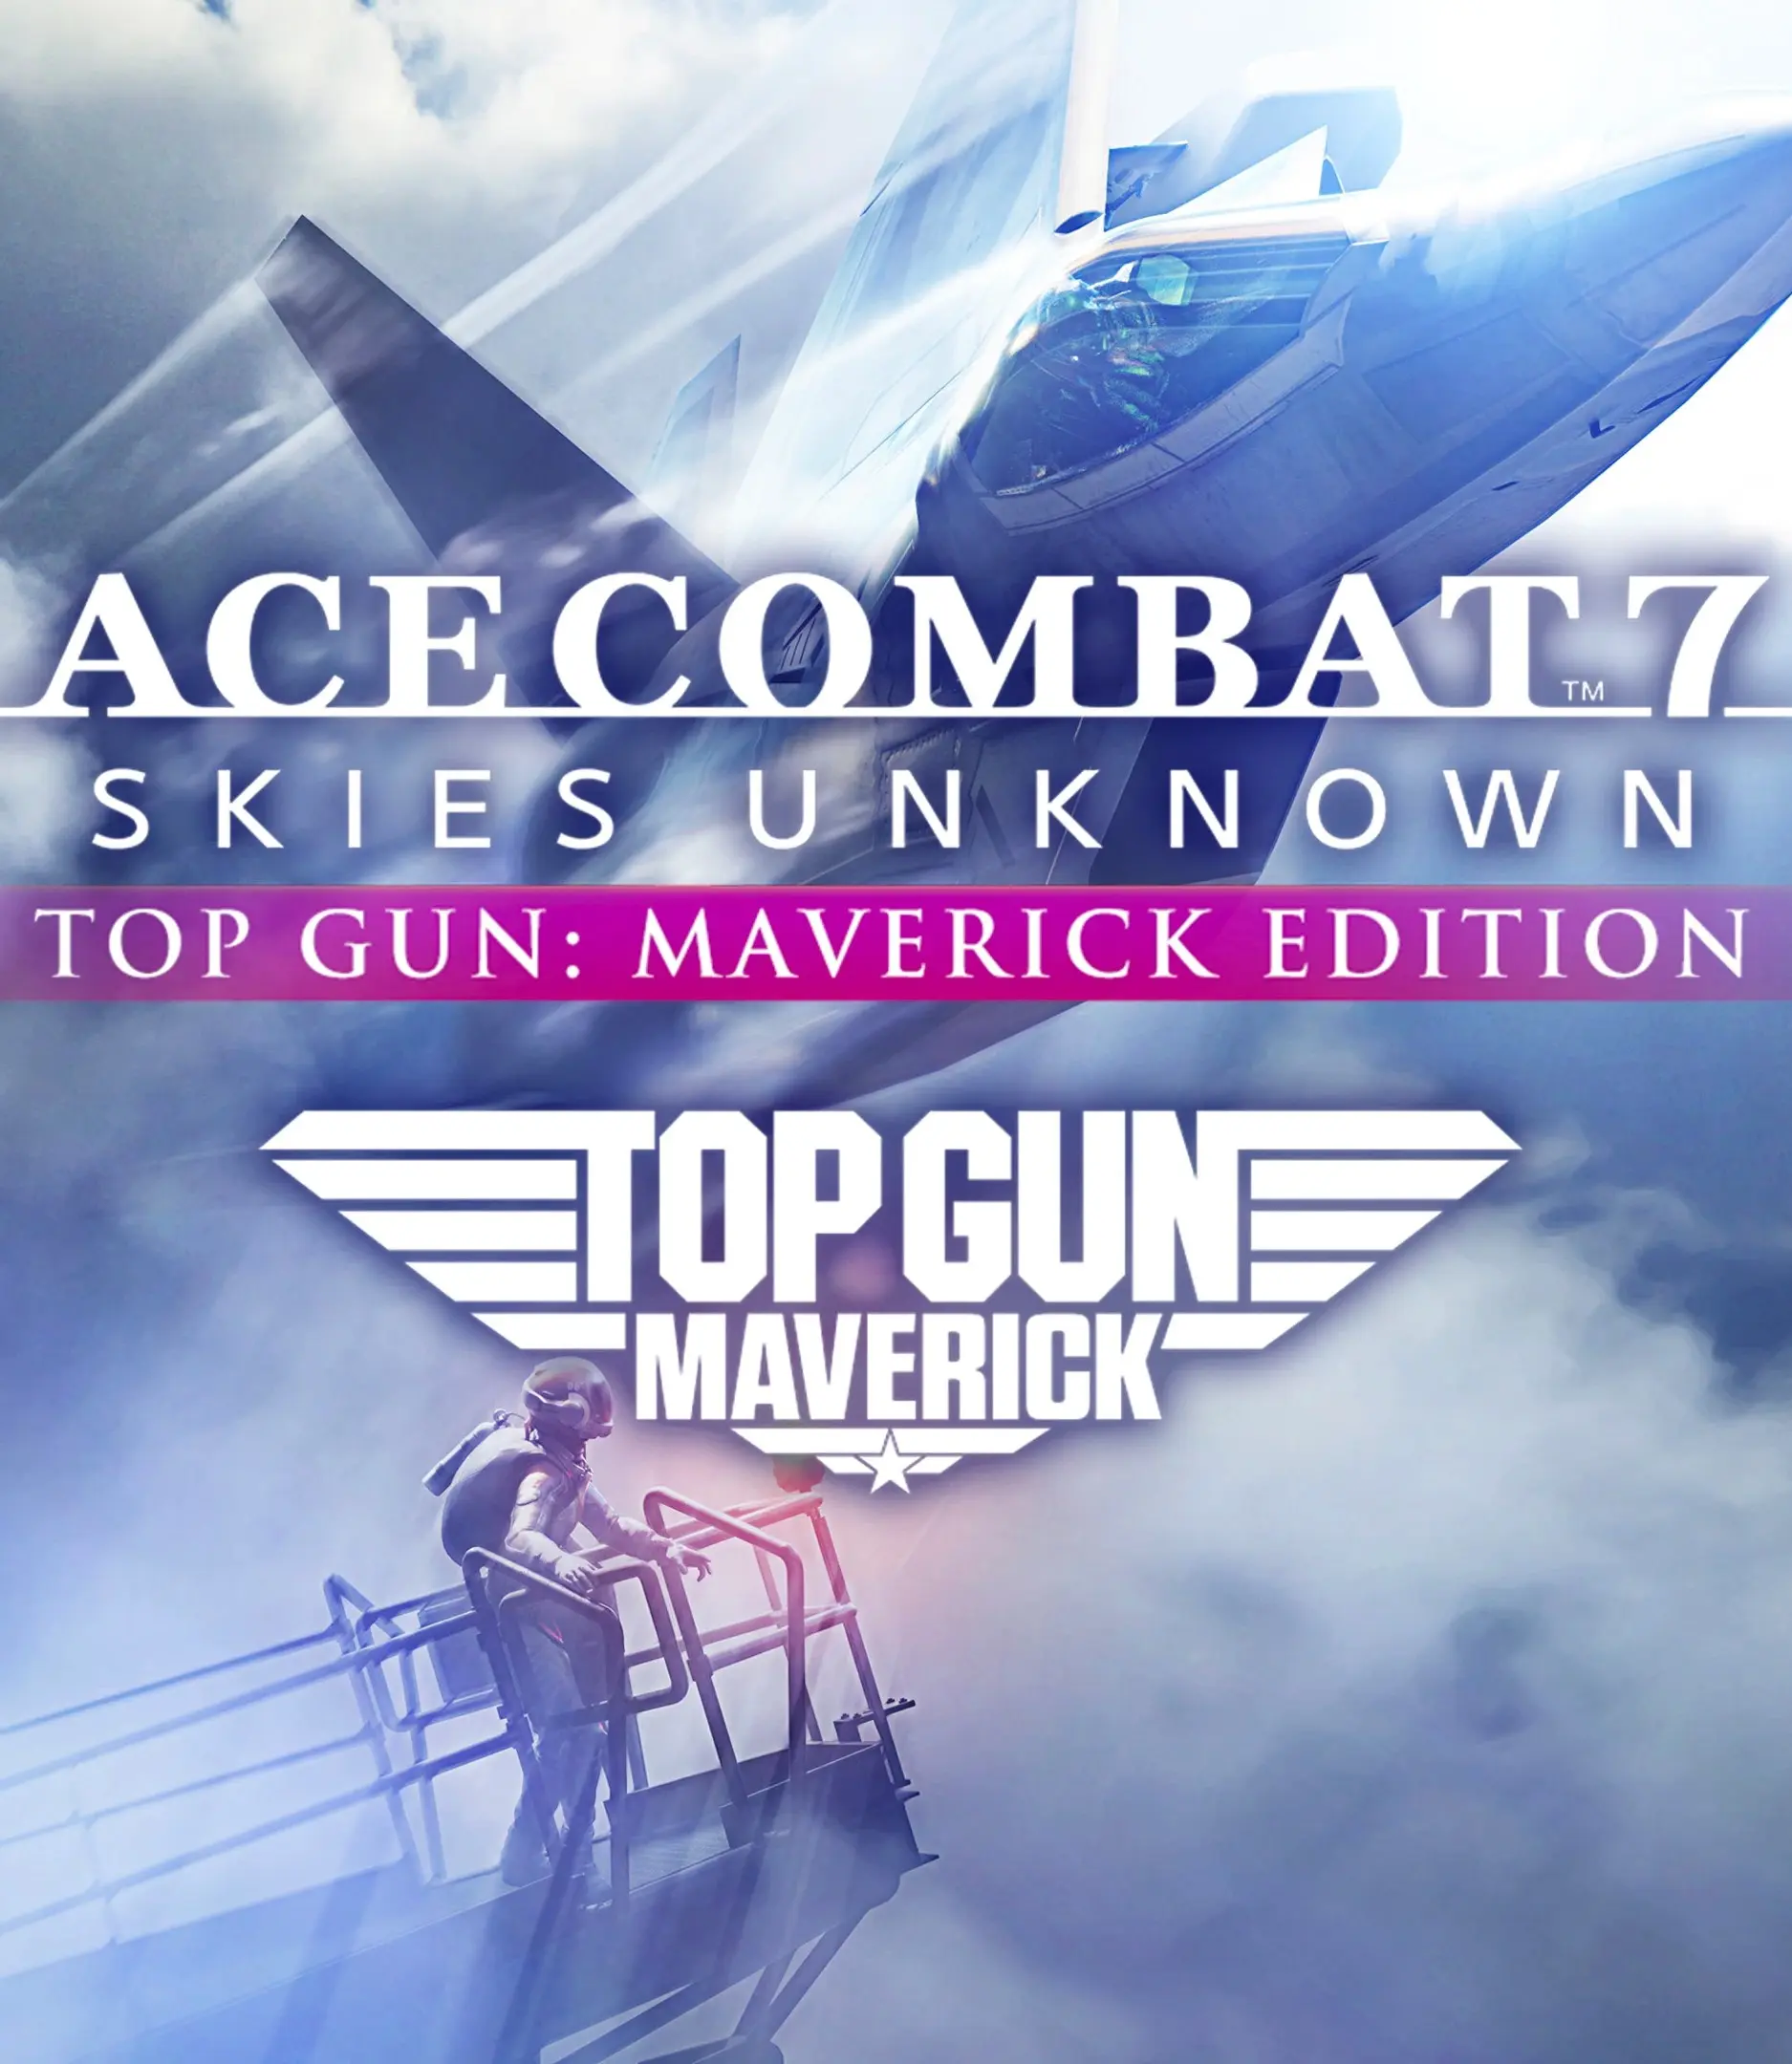 Ace Combat 7: Skies Unknown - Top Gun Maverick Edition (AR) (Xbox One / Xbox Series X|S) - Xbox Live - Digital Code